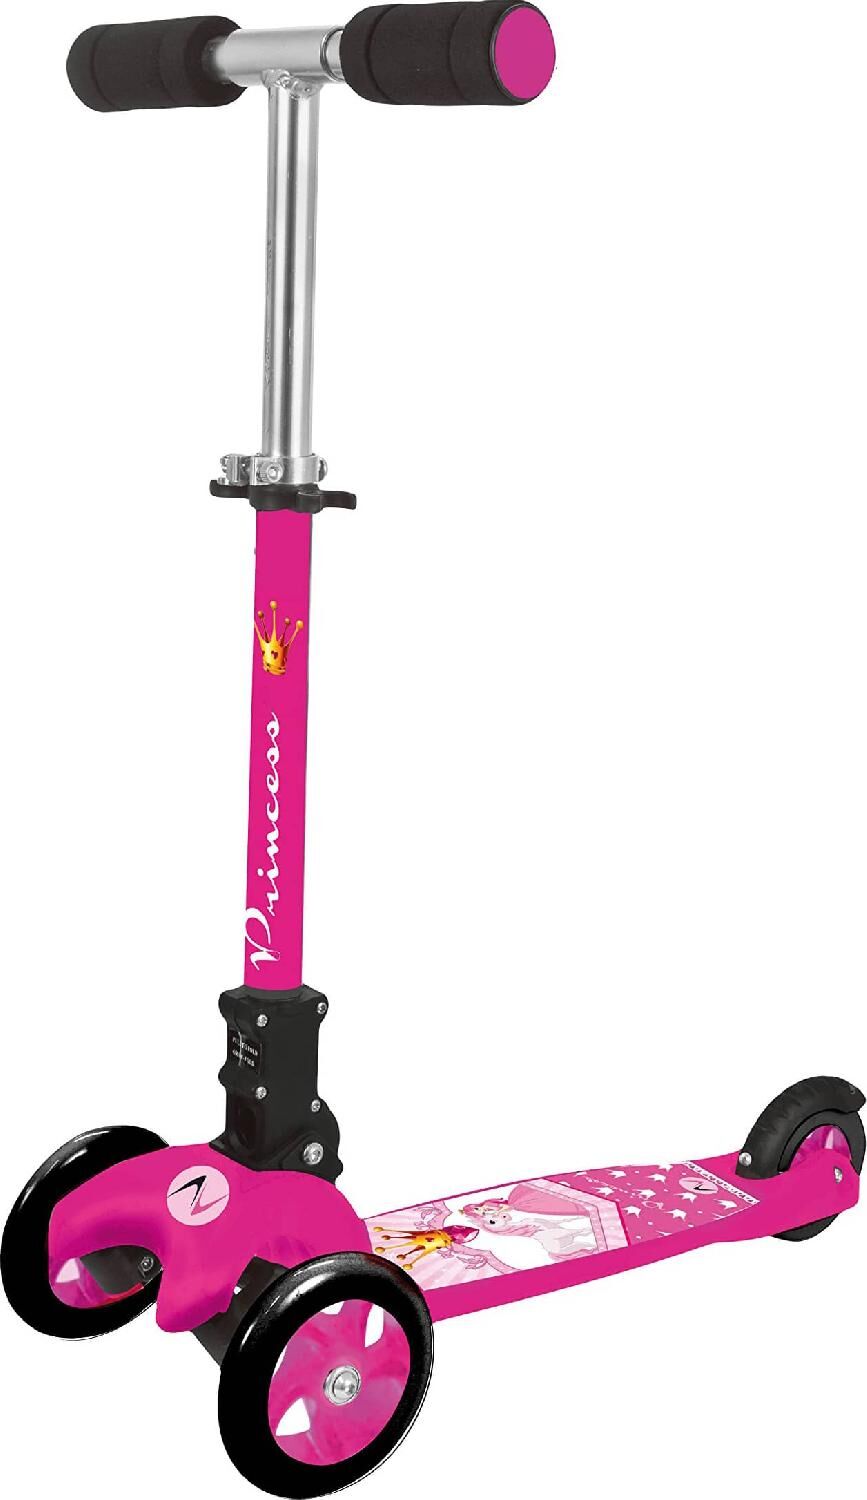 garlando grg-004 monopattino 3 ruote per bambini colore rosa - grg-004 princess